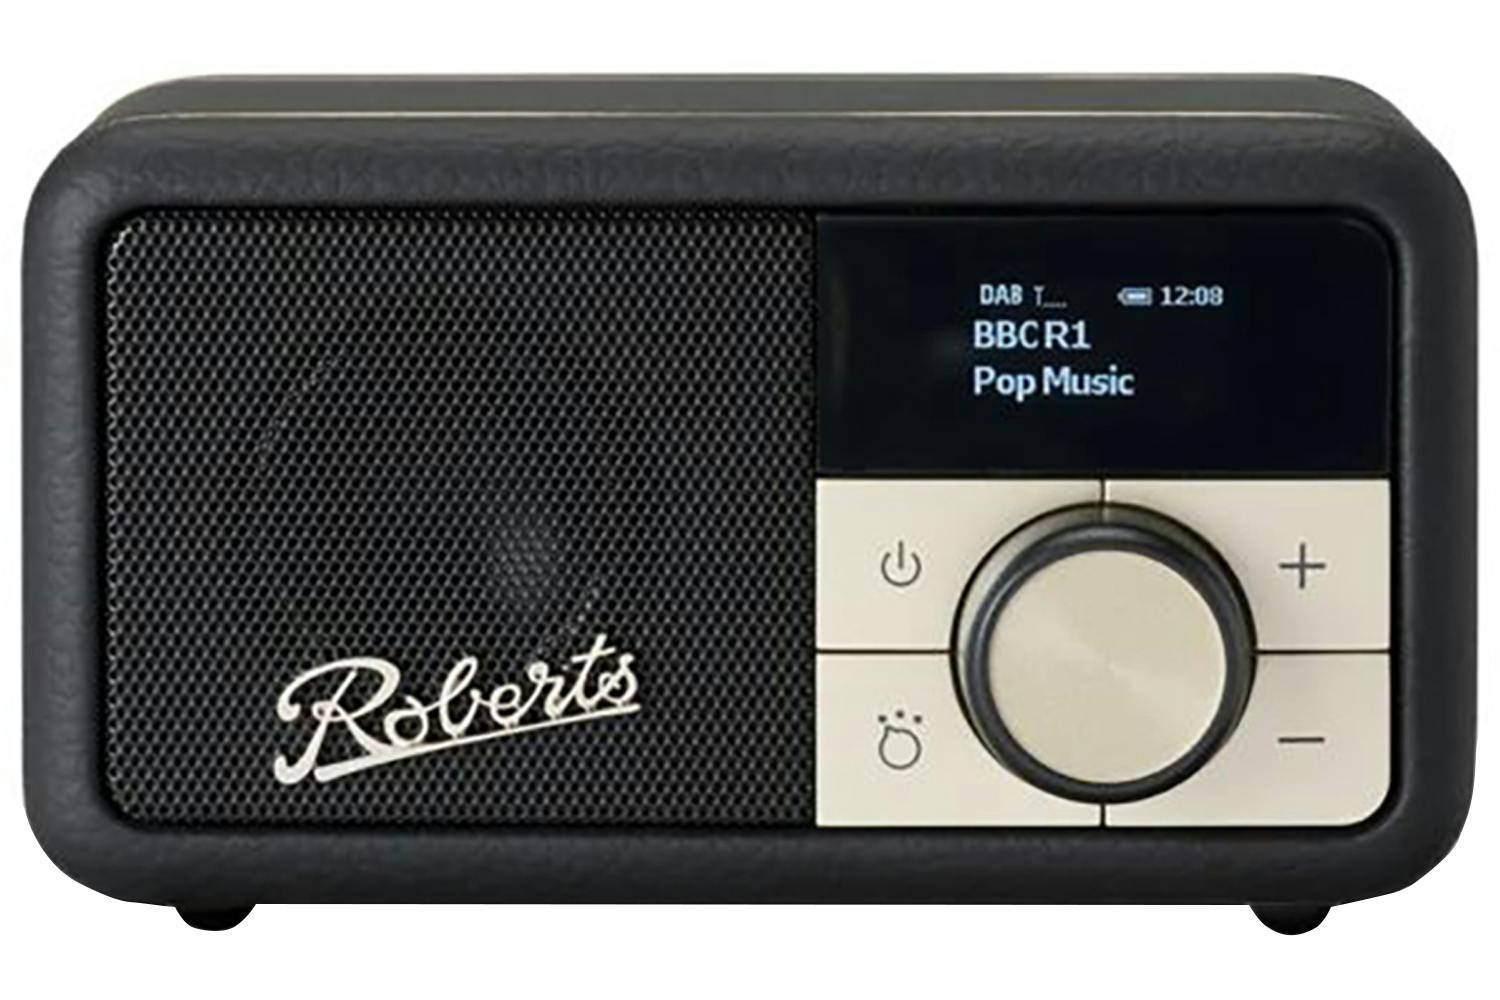 Roberts Revival Petite FM Radio with Bluetooth | Black